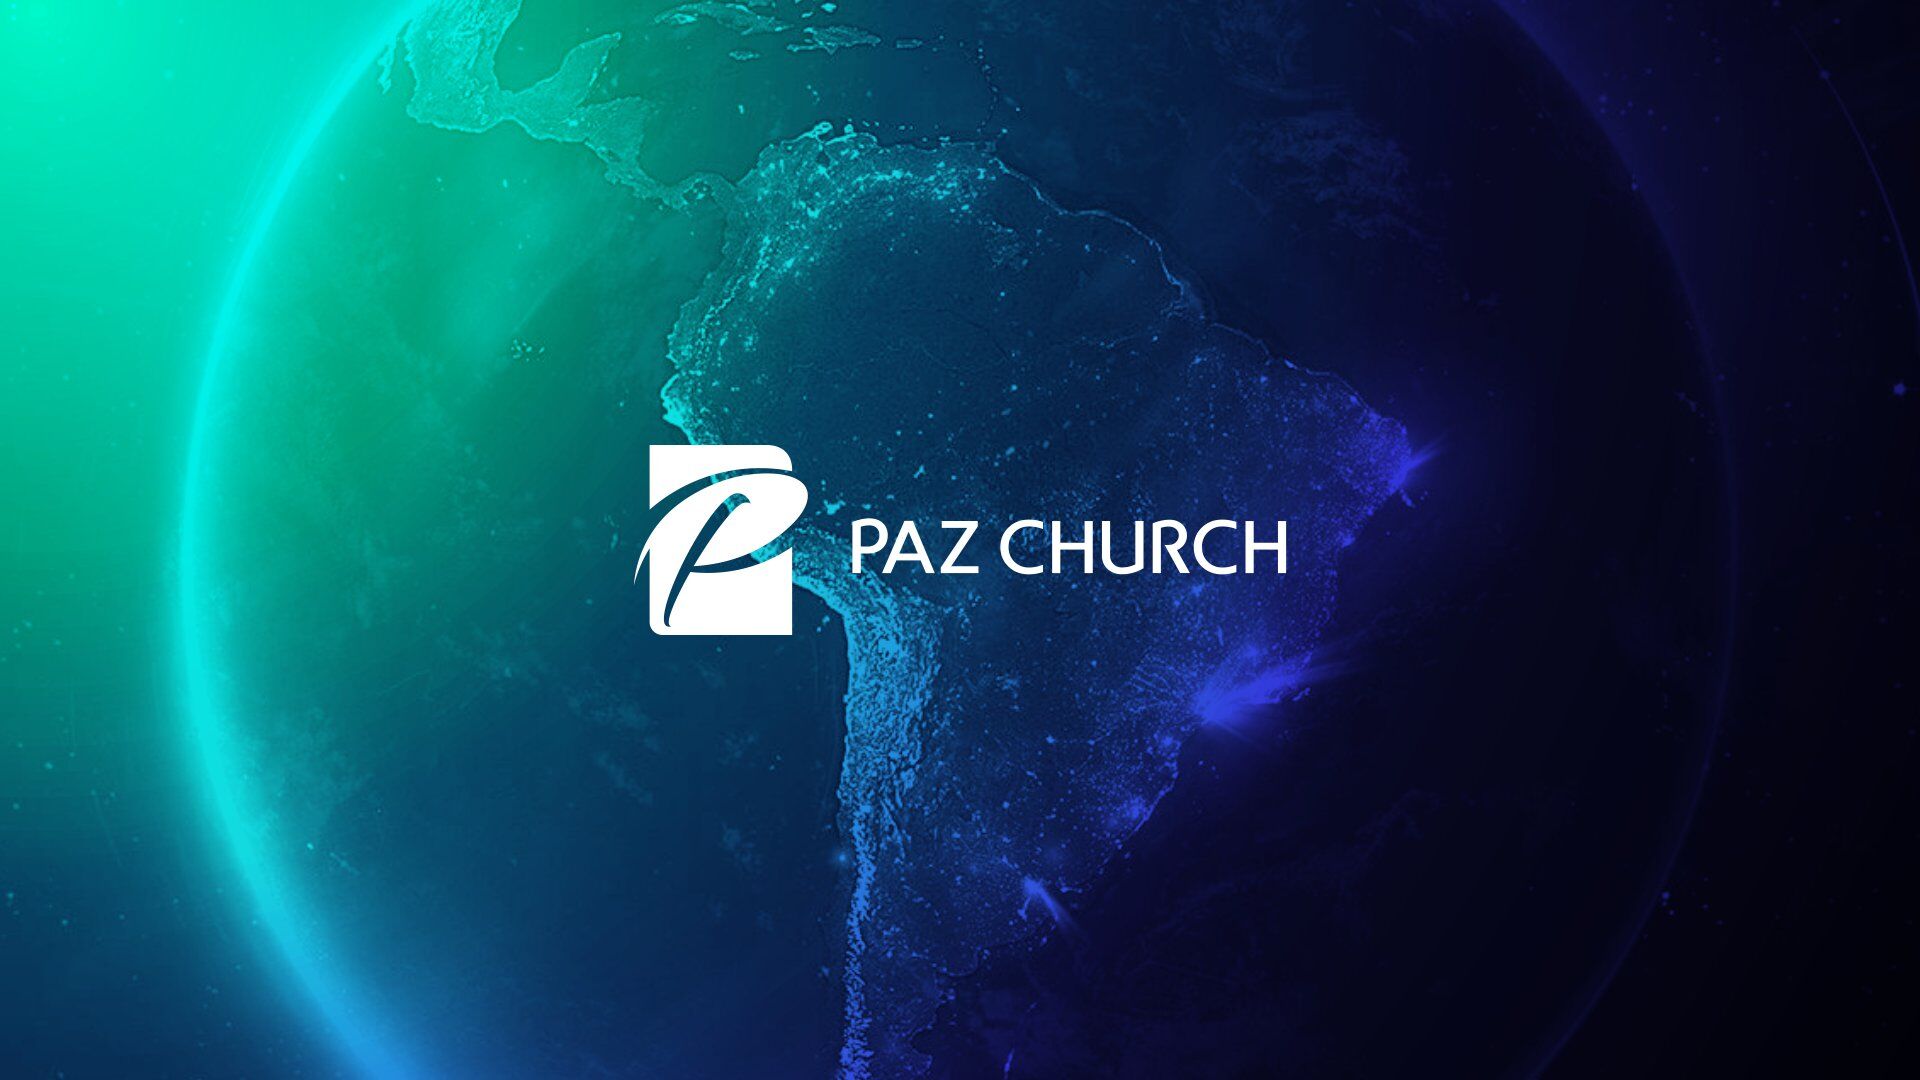 (c) Paz.church